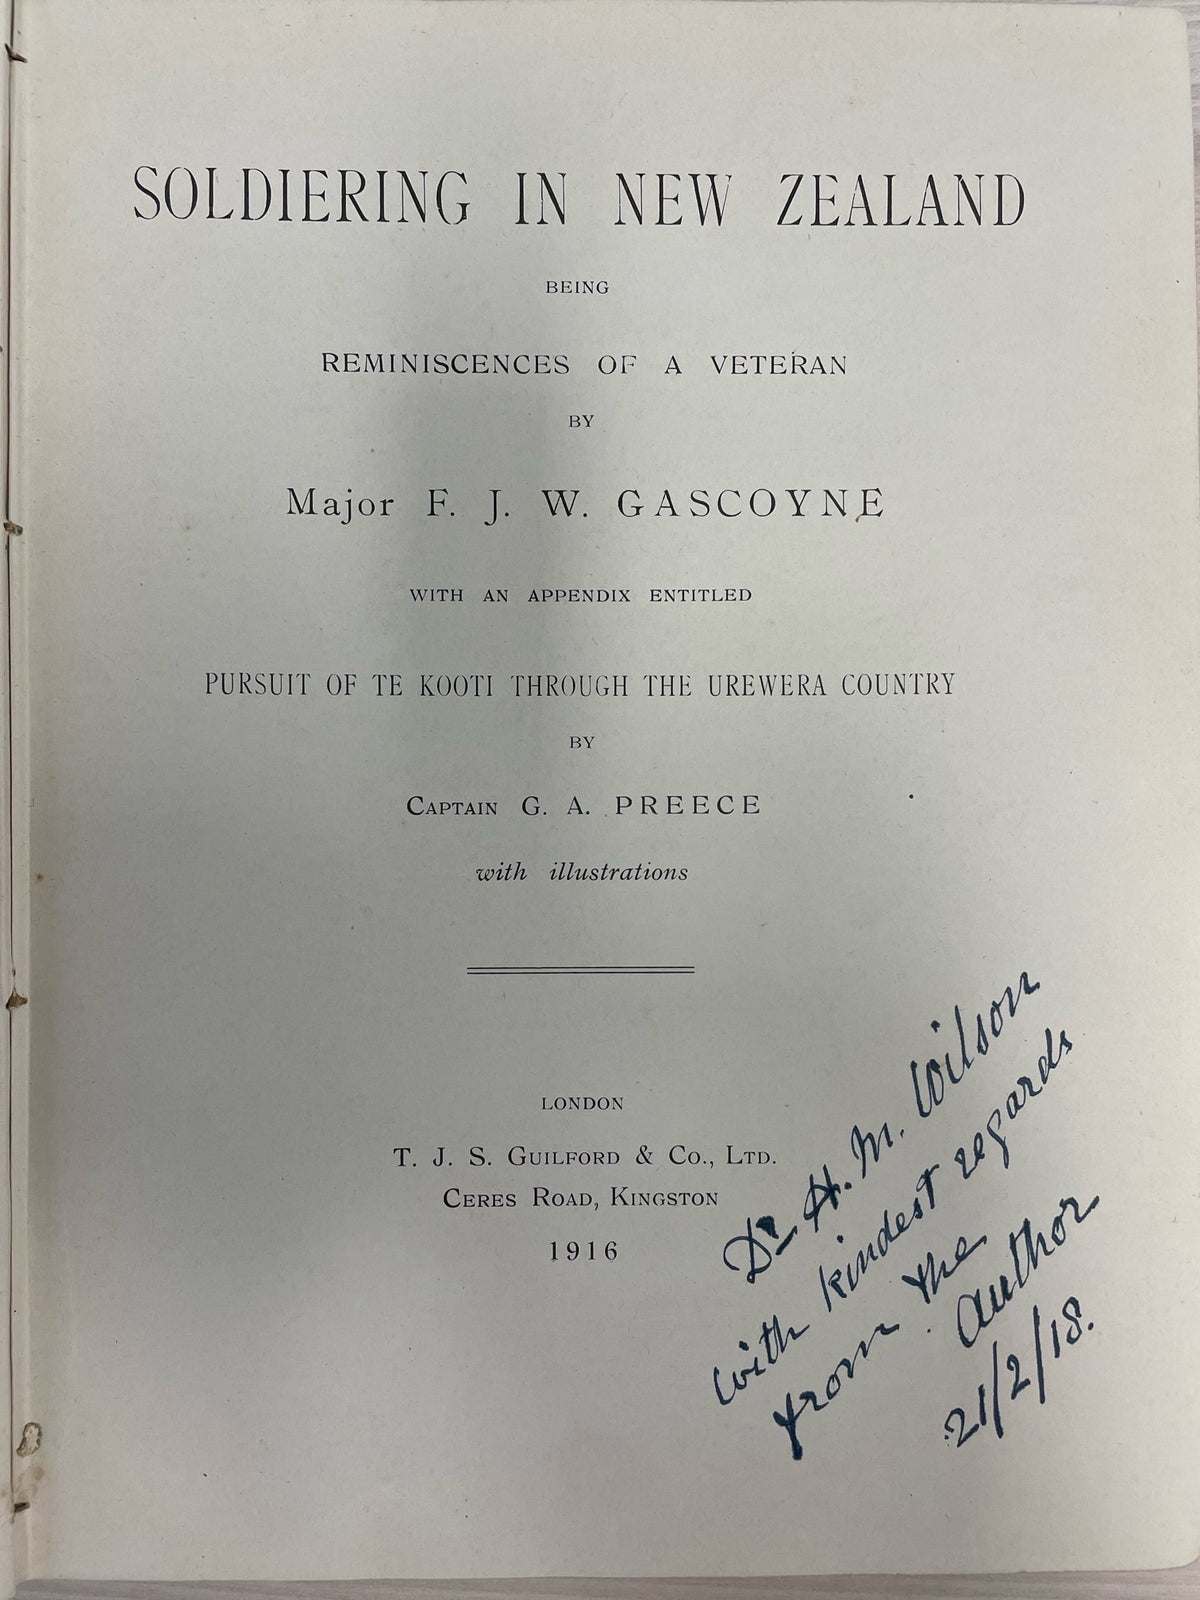 Soldiering in New Zealand: being reminiscences of a veteran - Major F J W Gascoyne